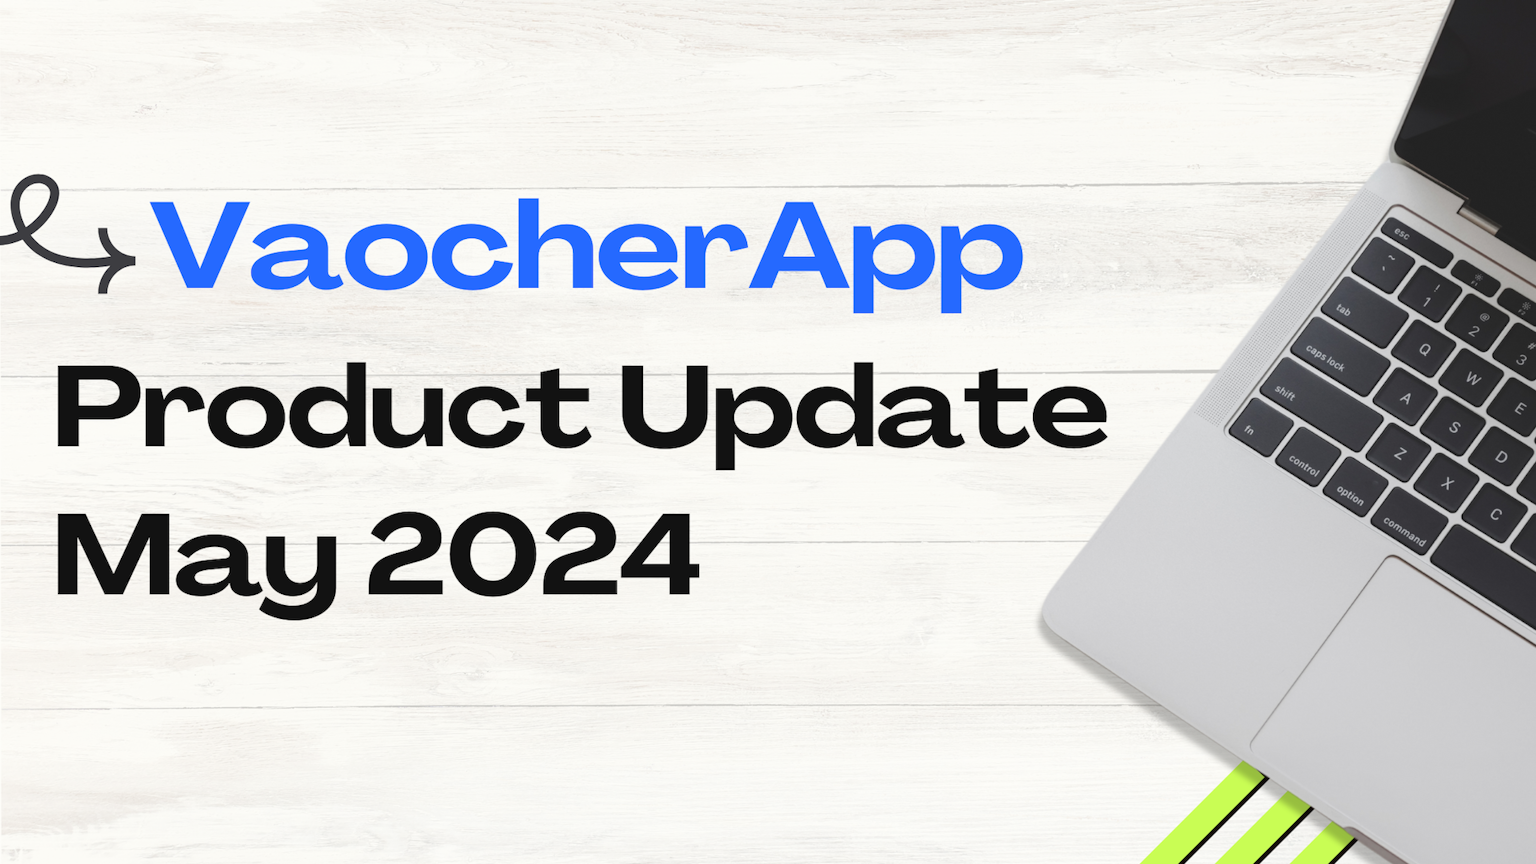 VaocherApp Product Update May 2024